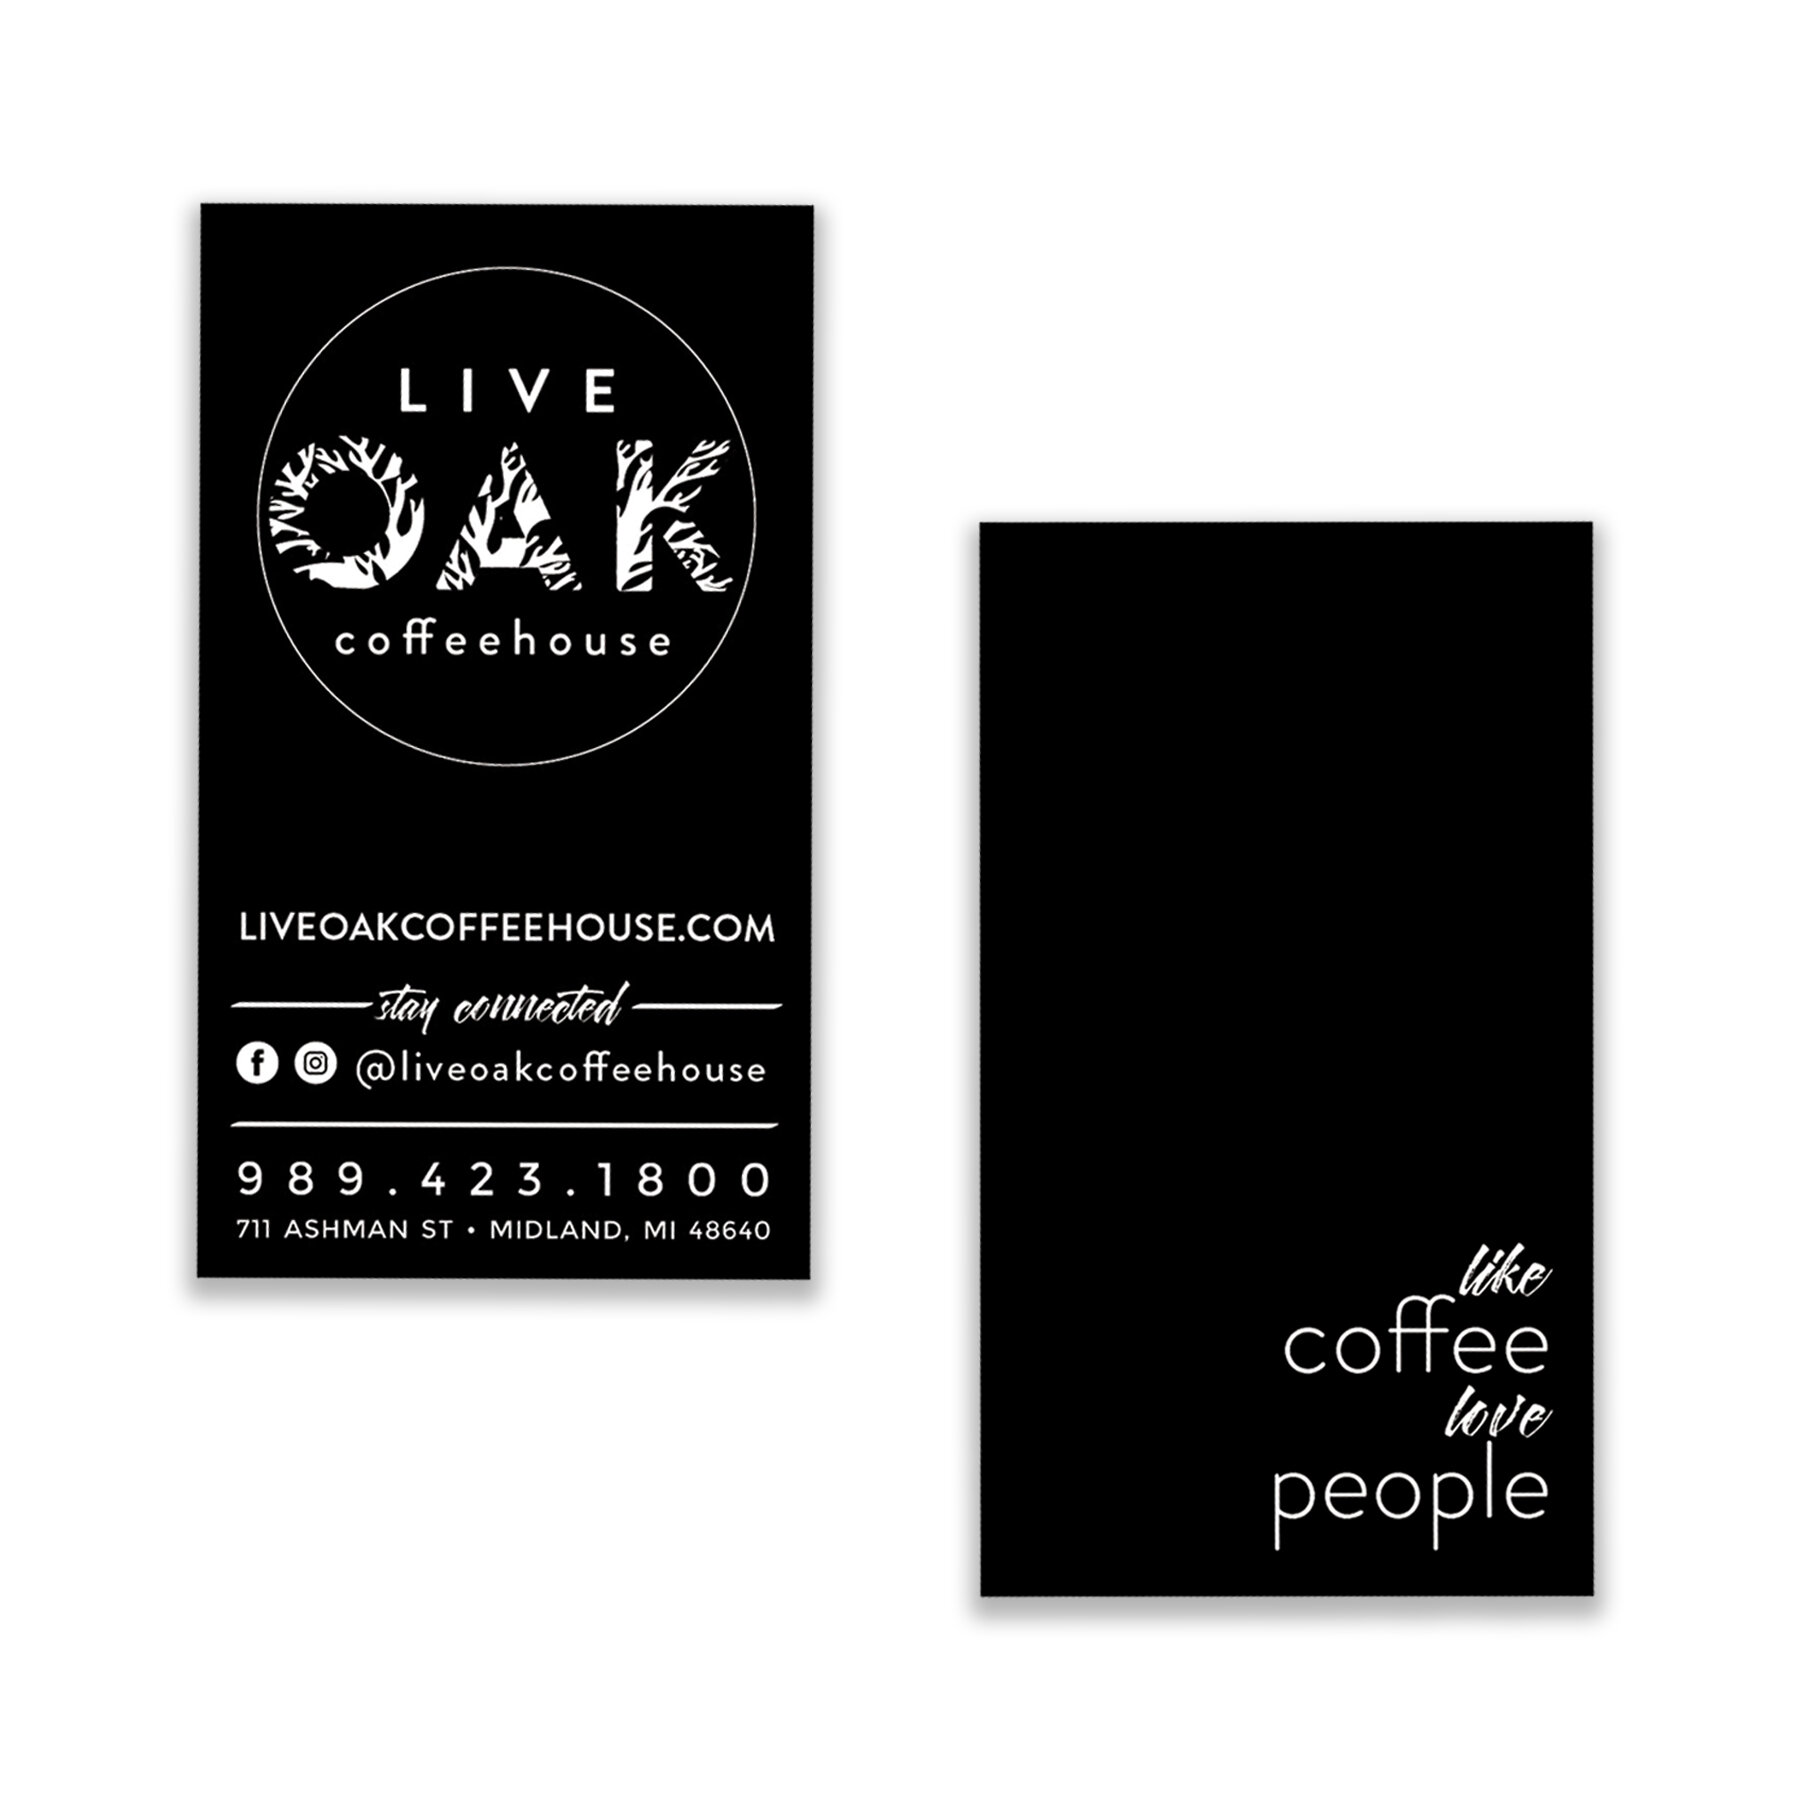 Live Oak Coffeehouse Vertical Business Cards.jpg